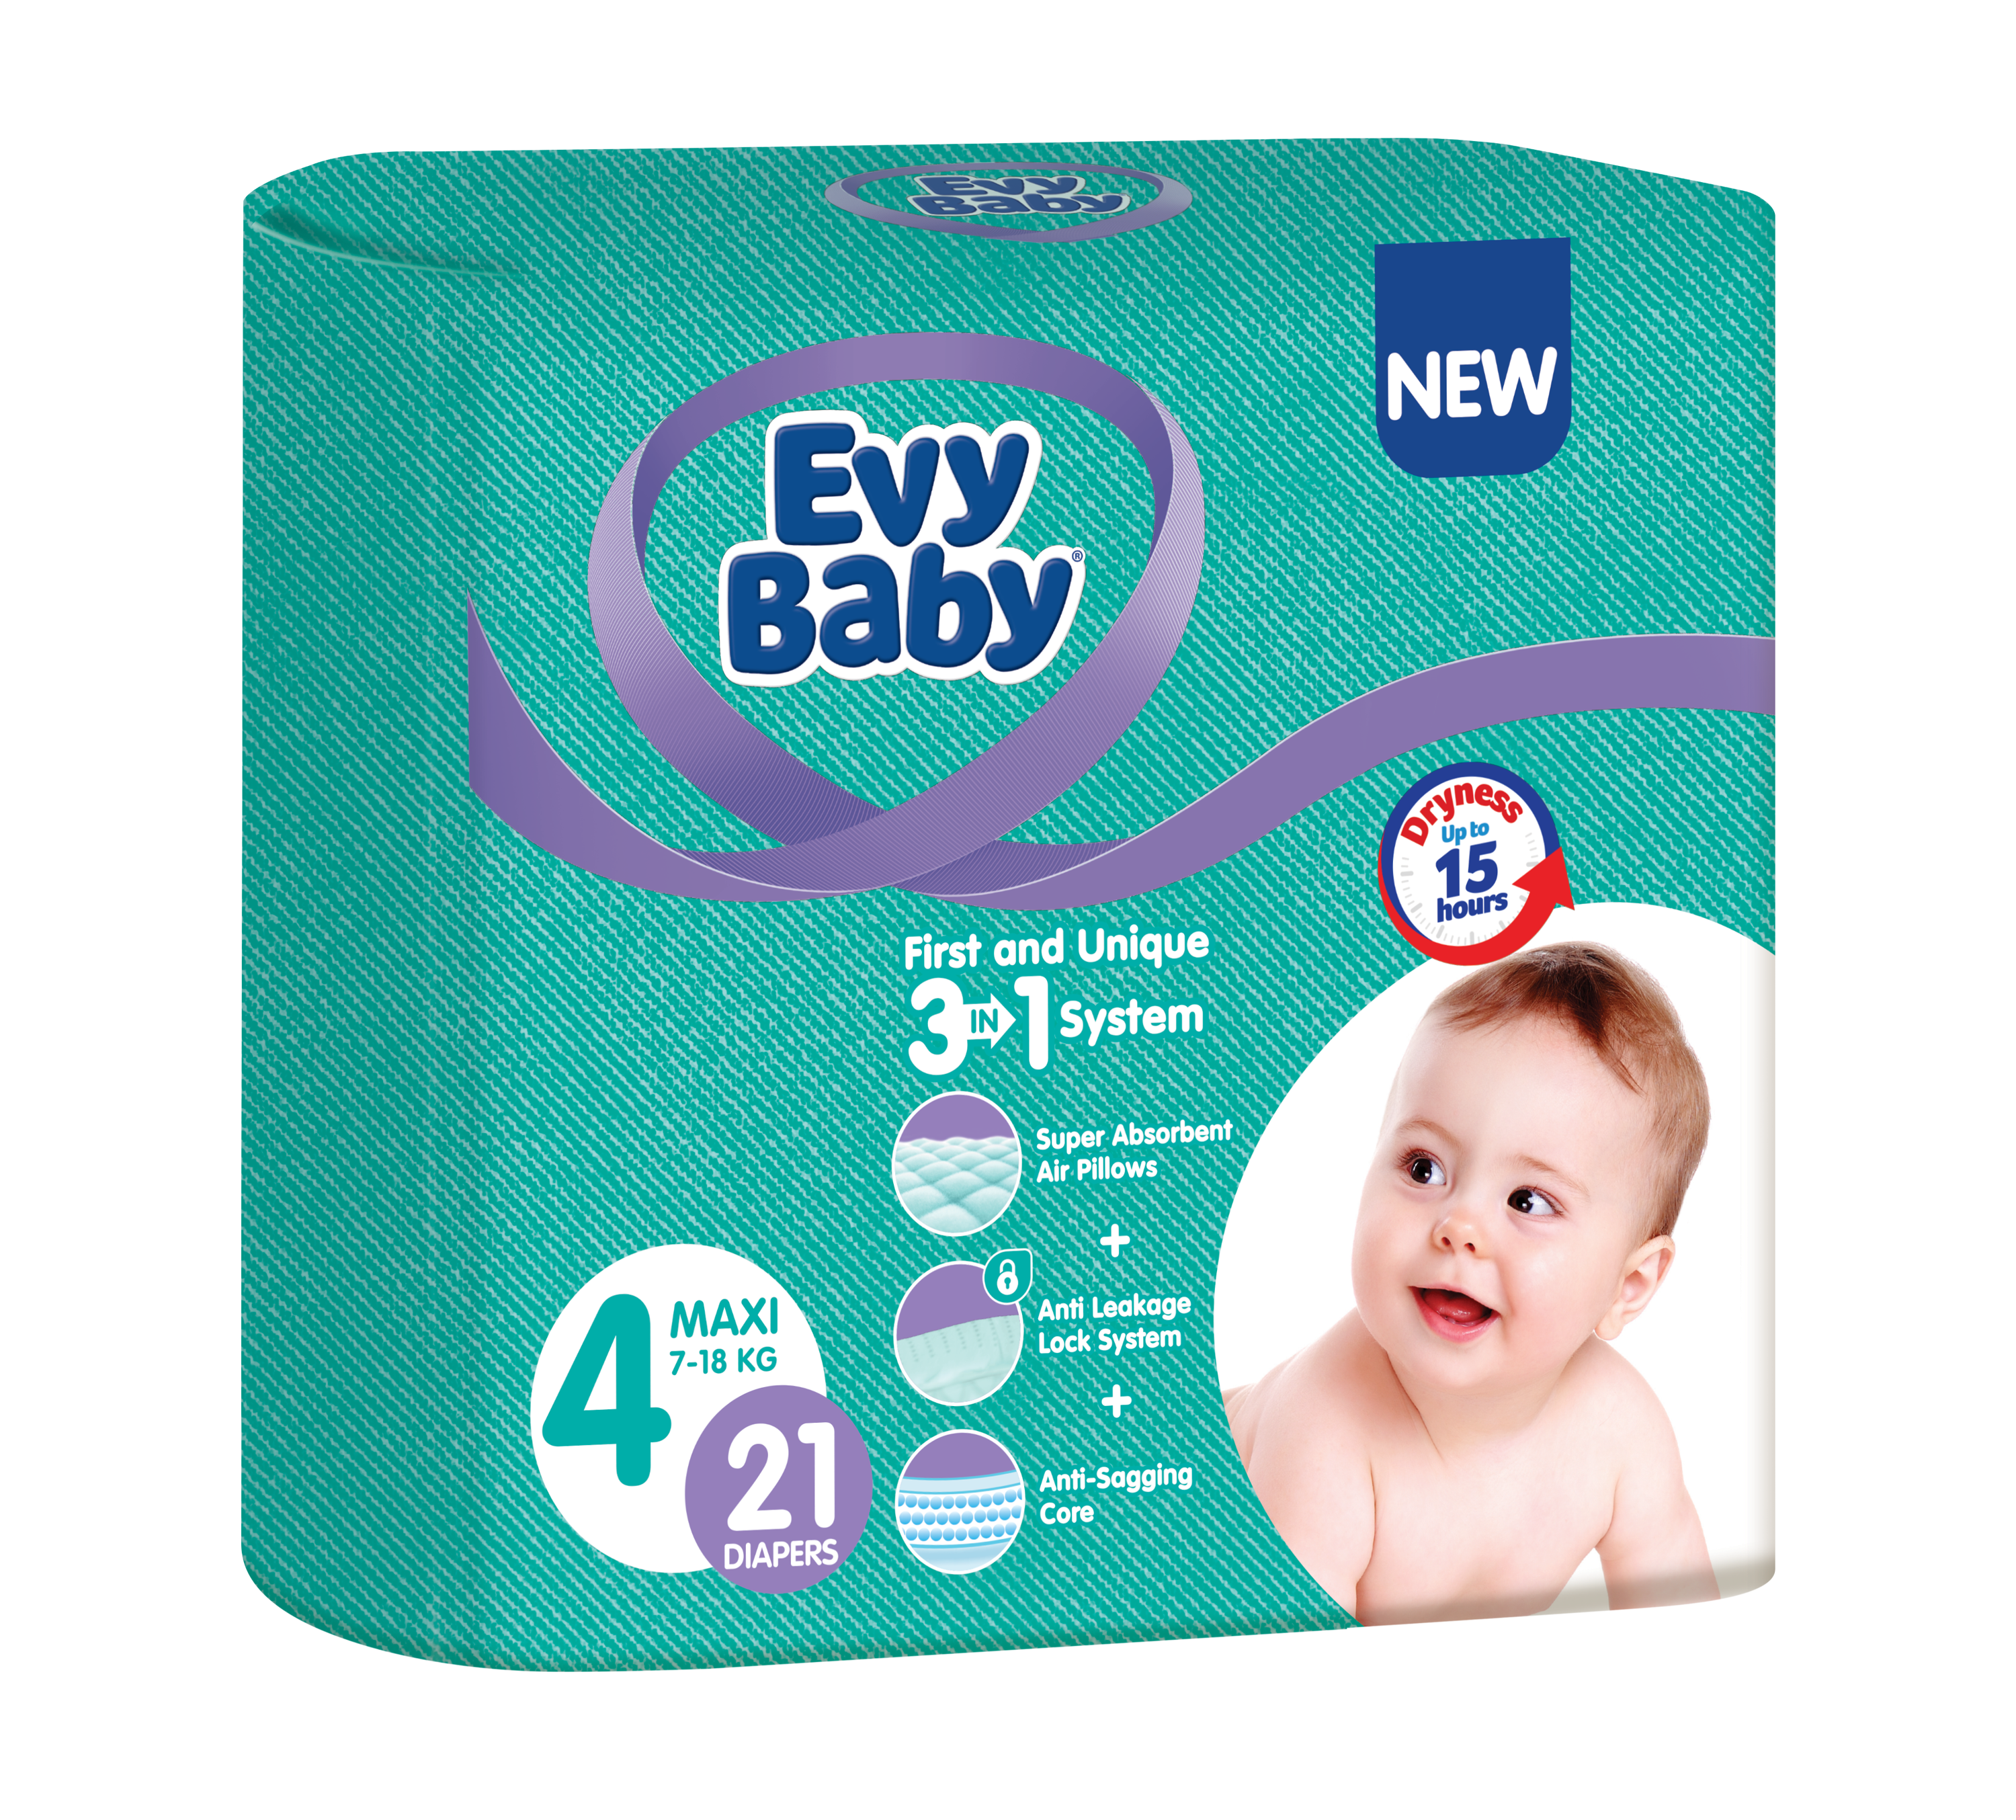 Evy Baby Standard maxi 7-18kg 21/1